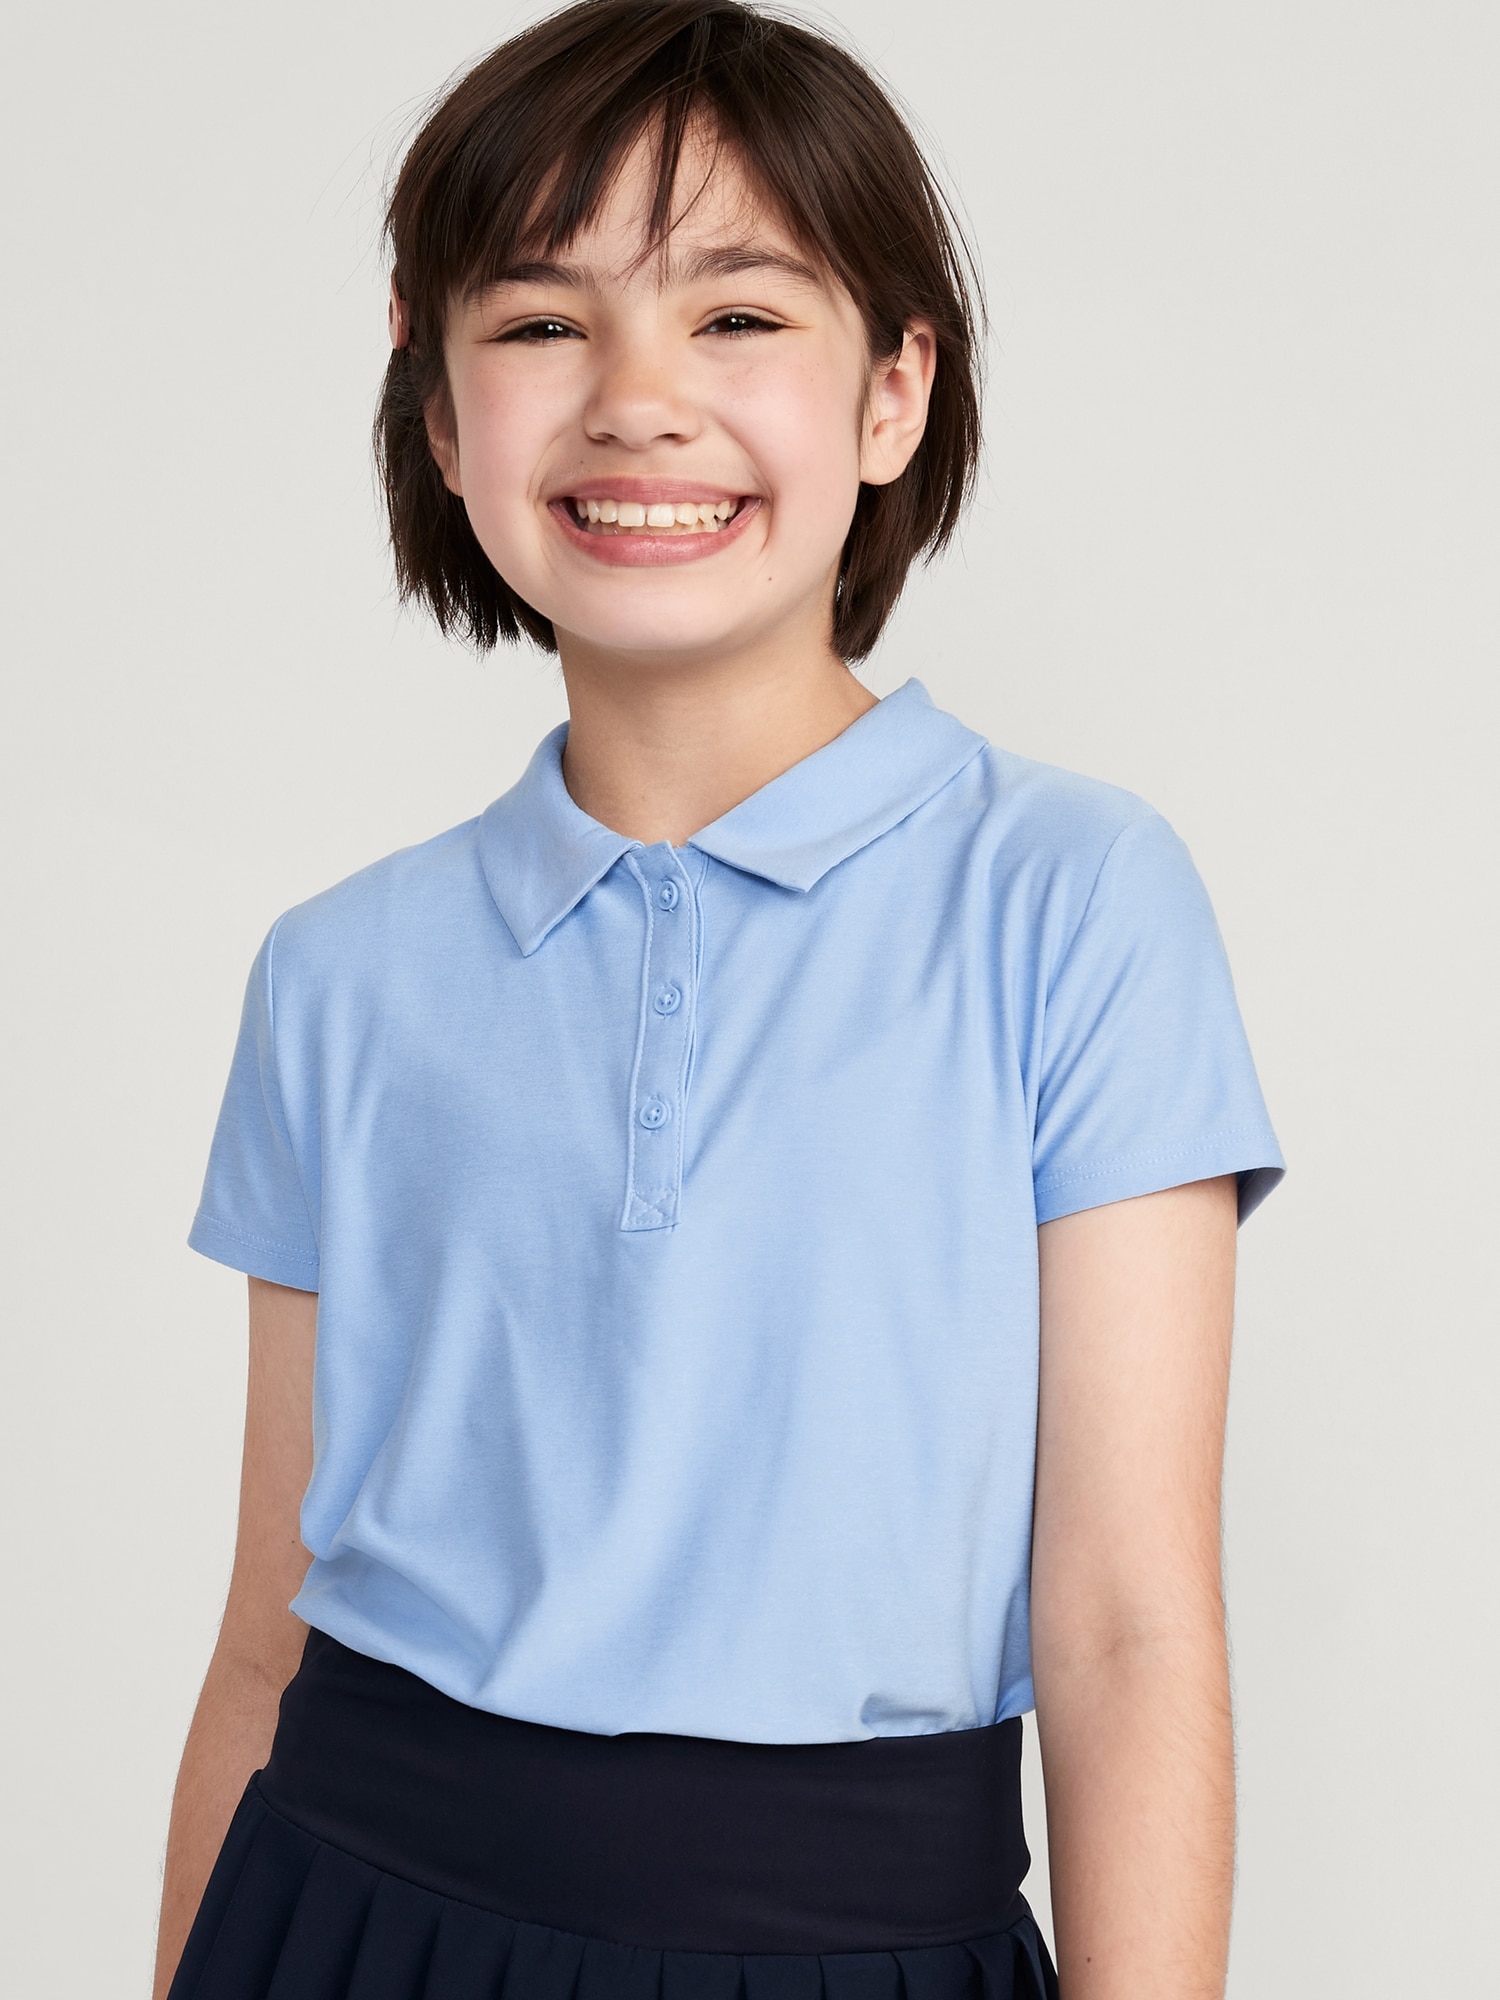 Old Navy - Cloud 94 Soft School Uniform Polo Shirt for Girls blue